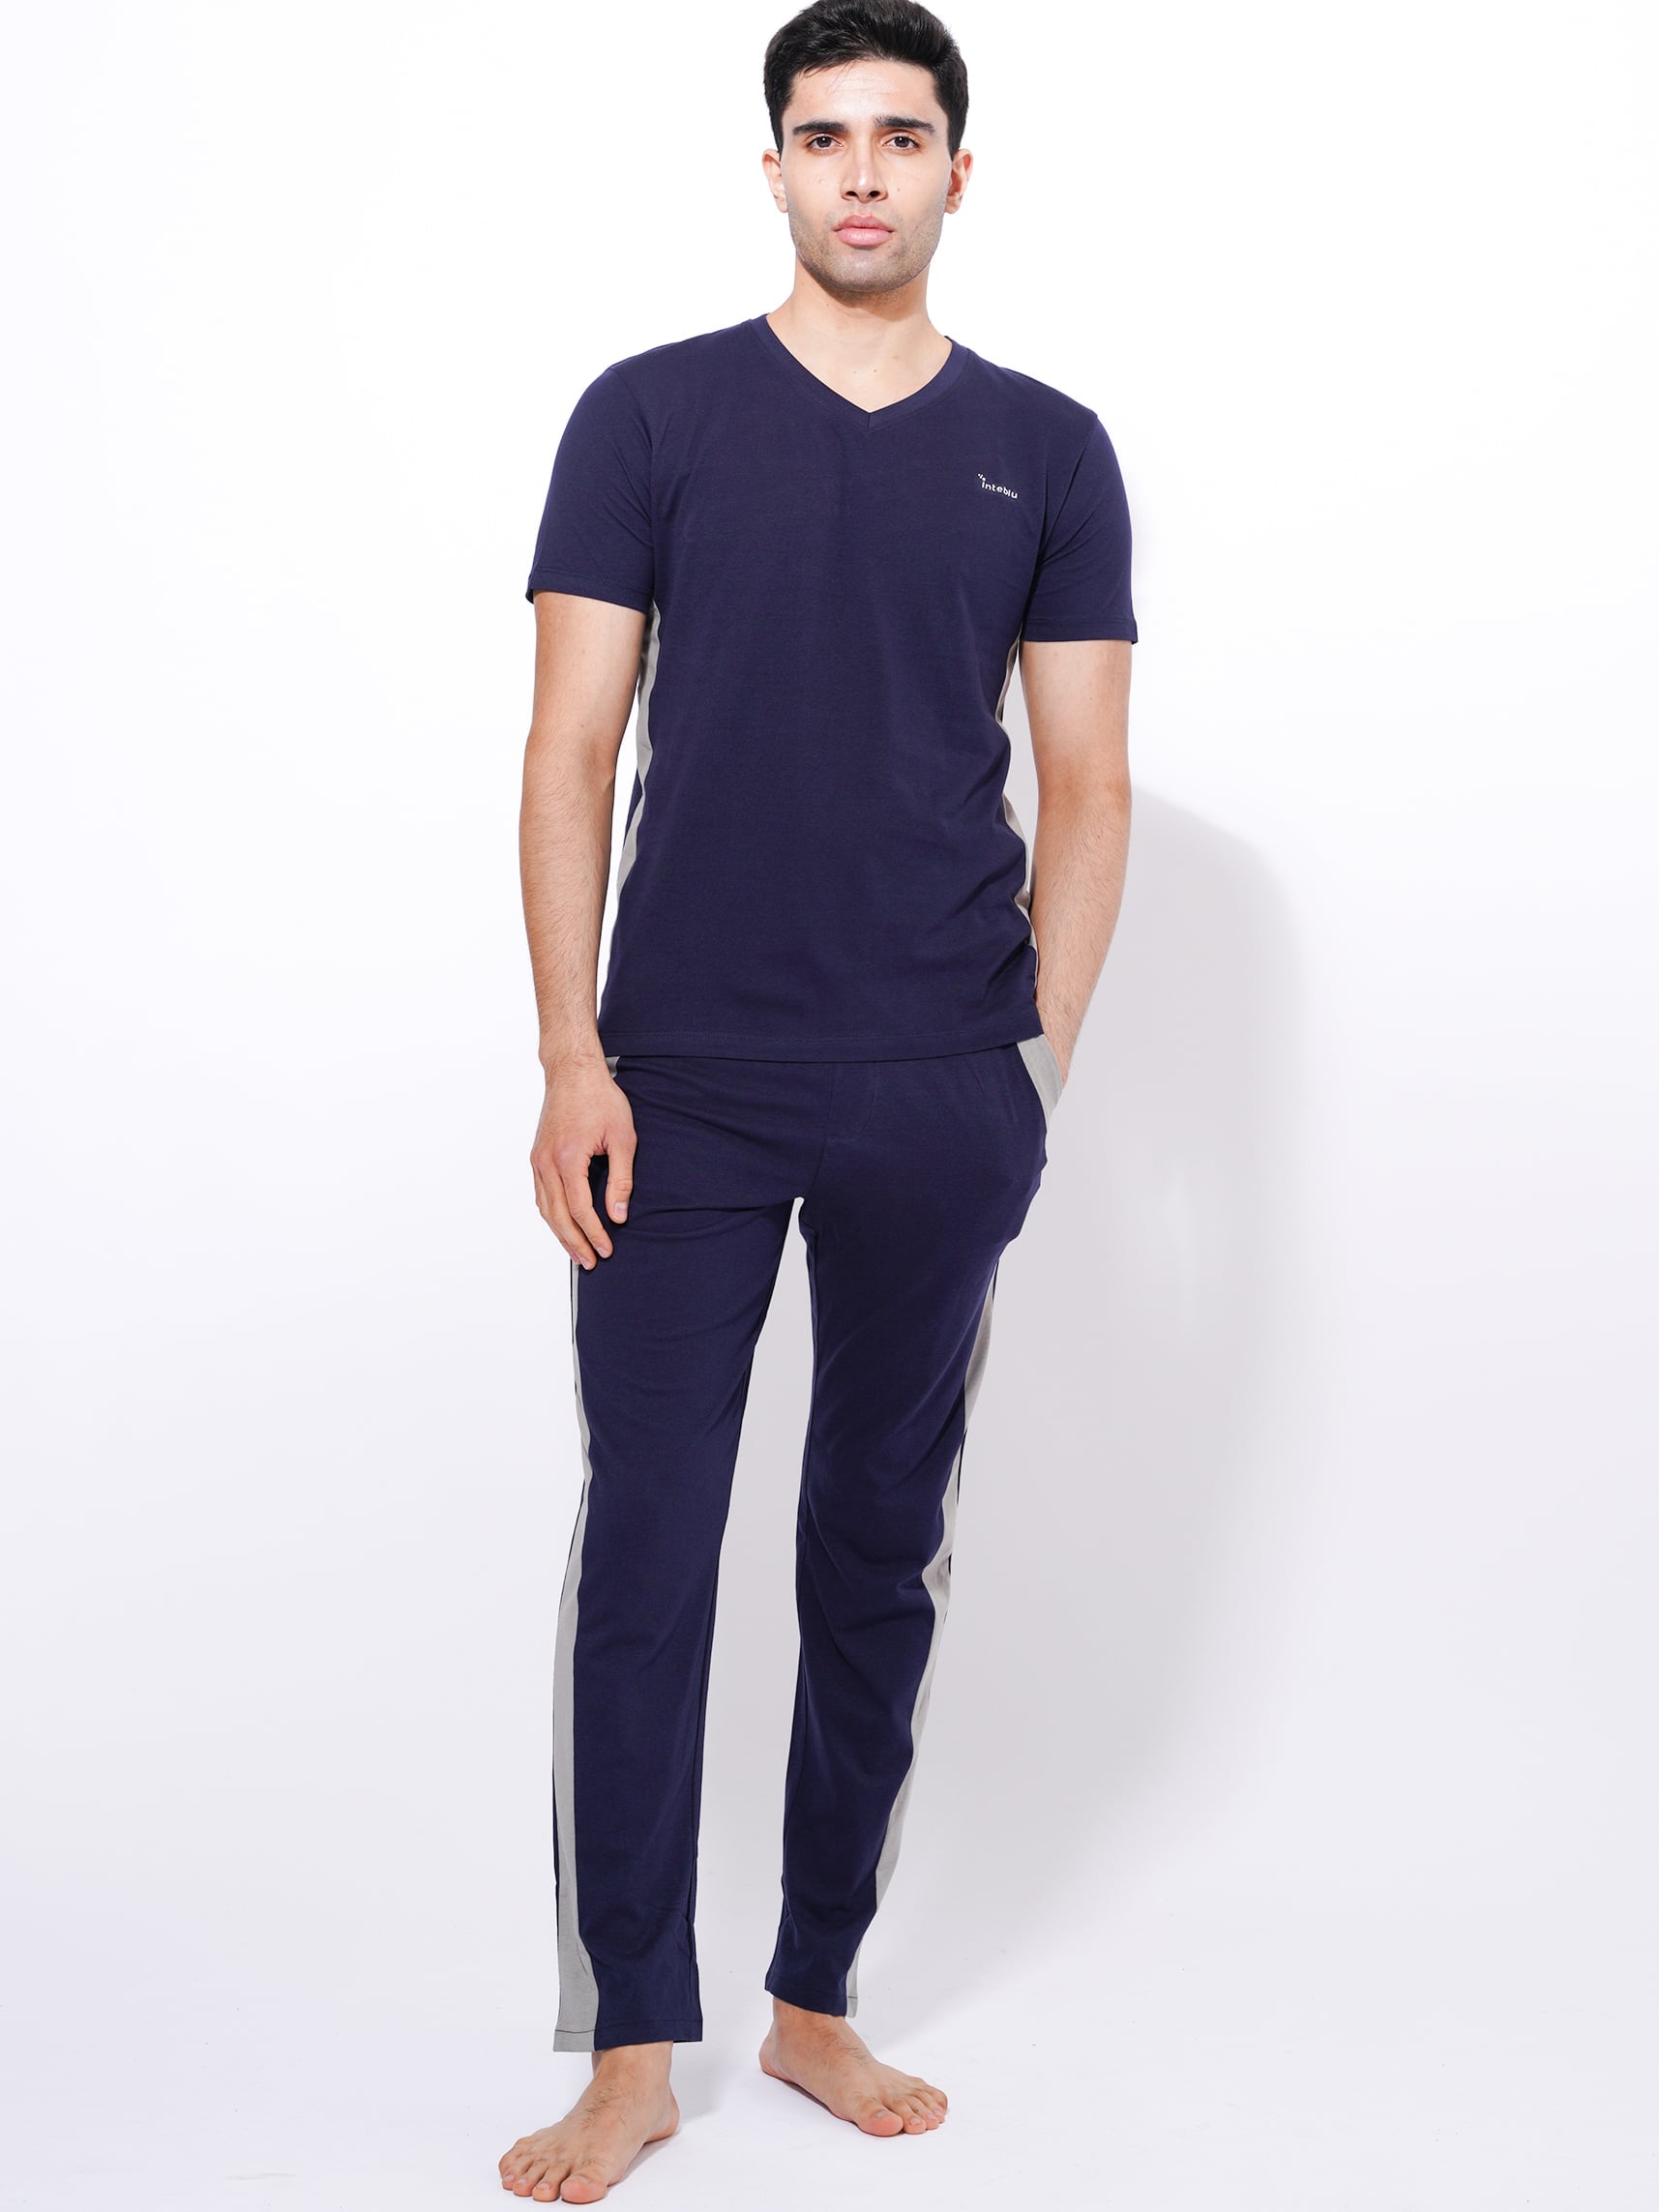 Men's Cotton Stripe T-Shirt & Pants Set | Inteblu - inteblu